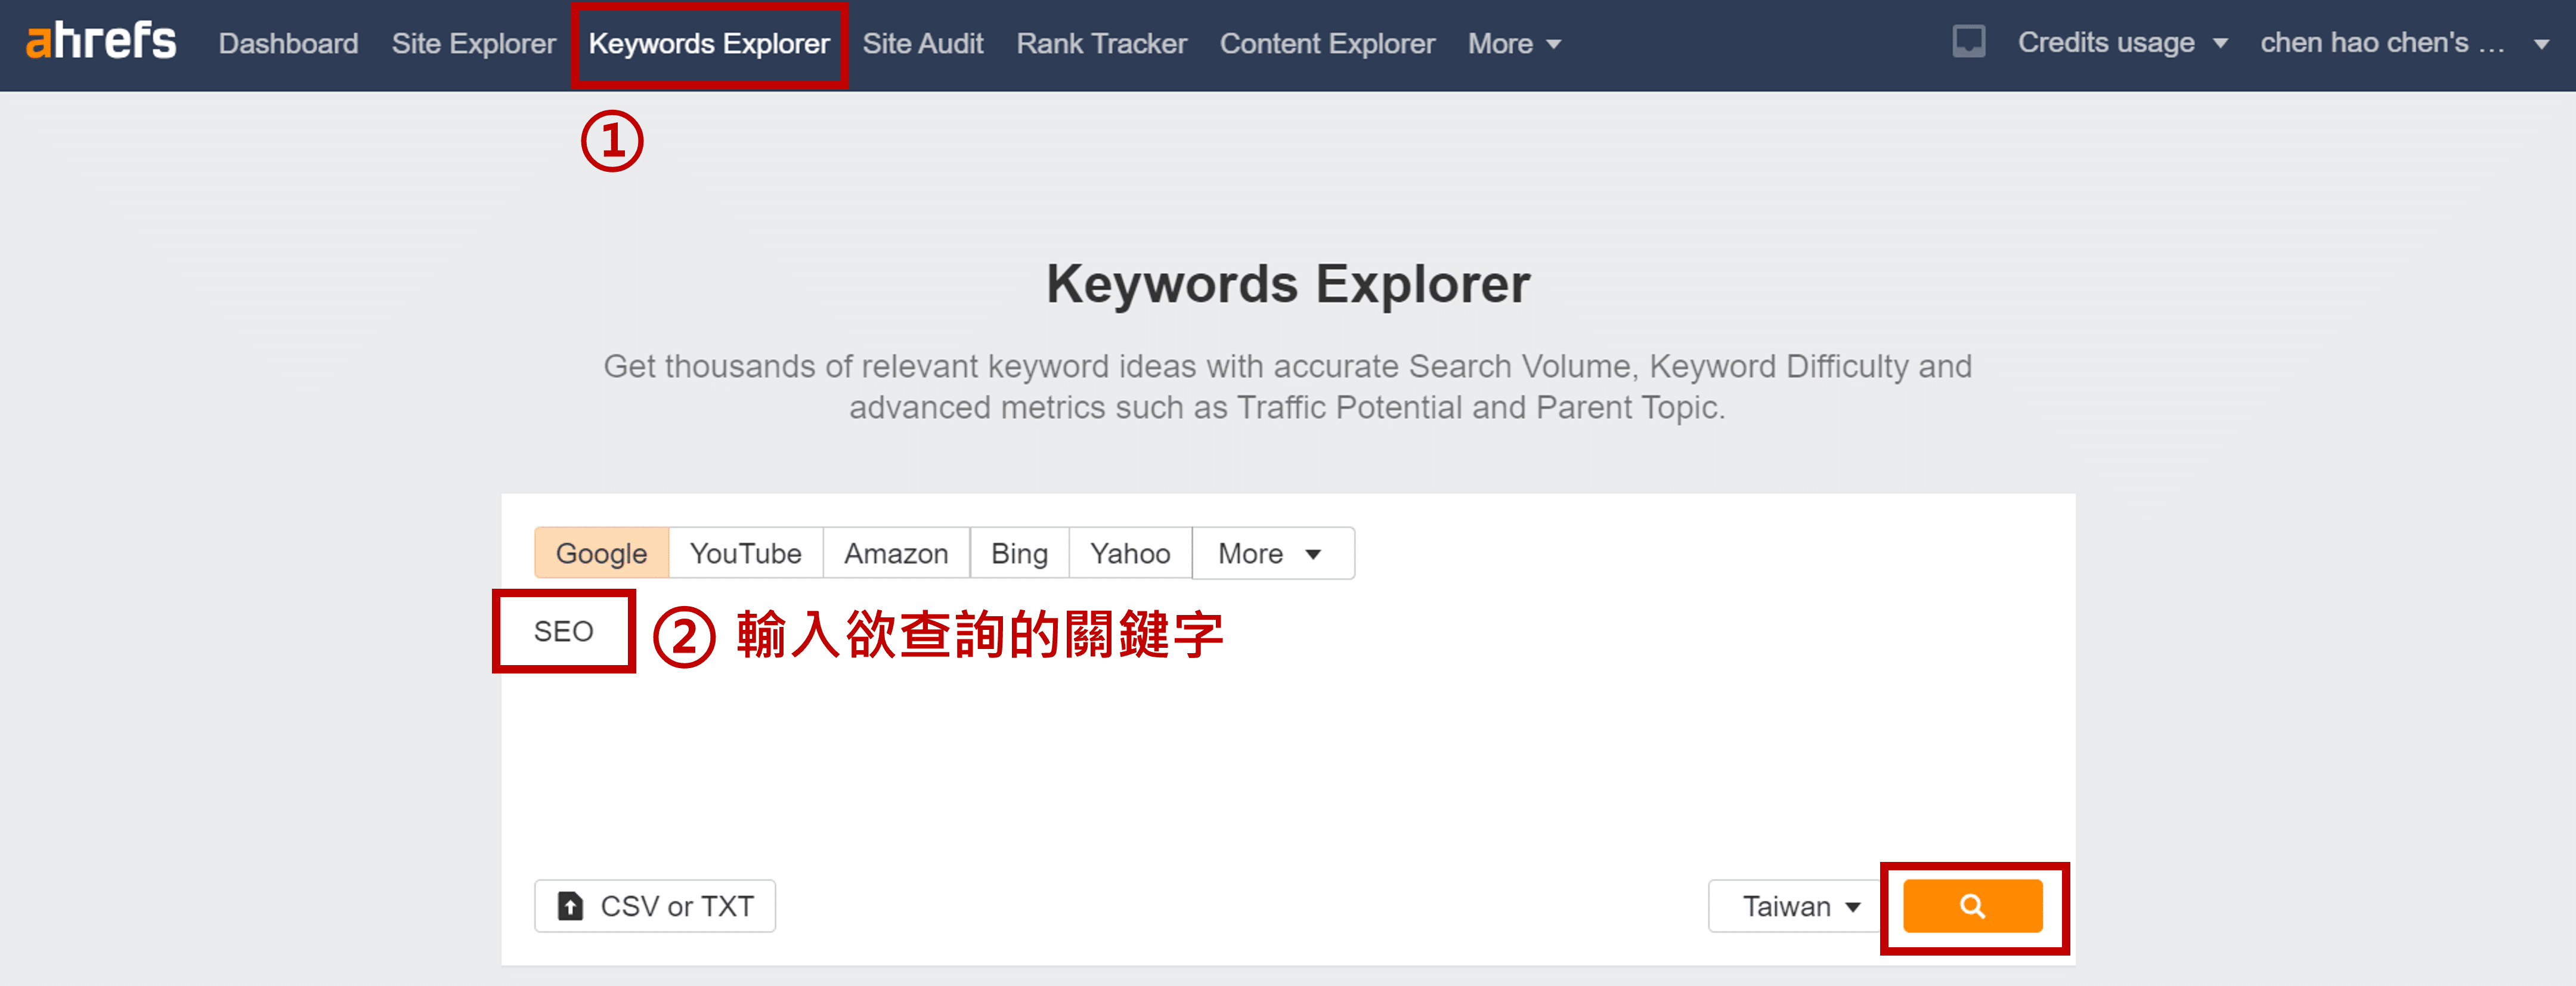 Ahrefs網站功能-Keywords Explorer 介面